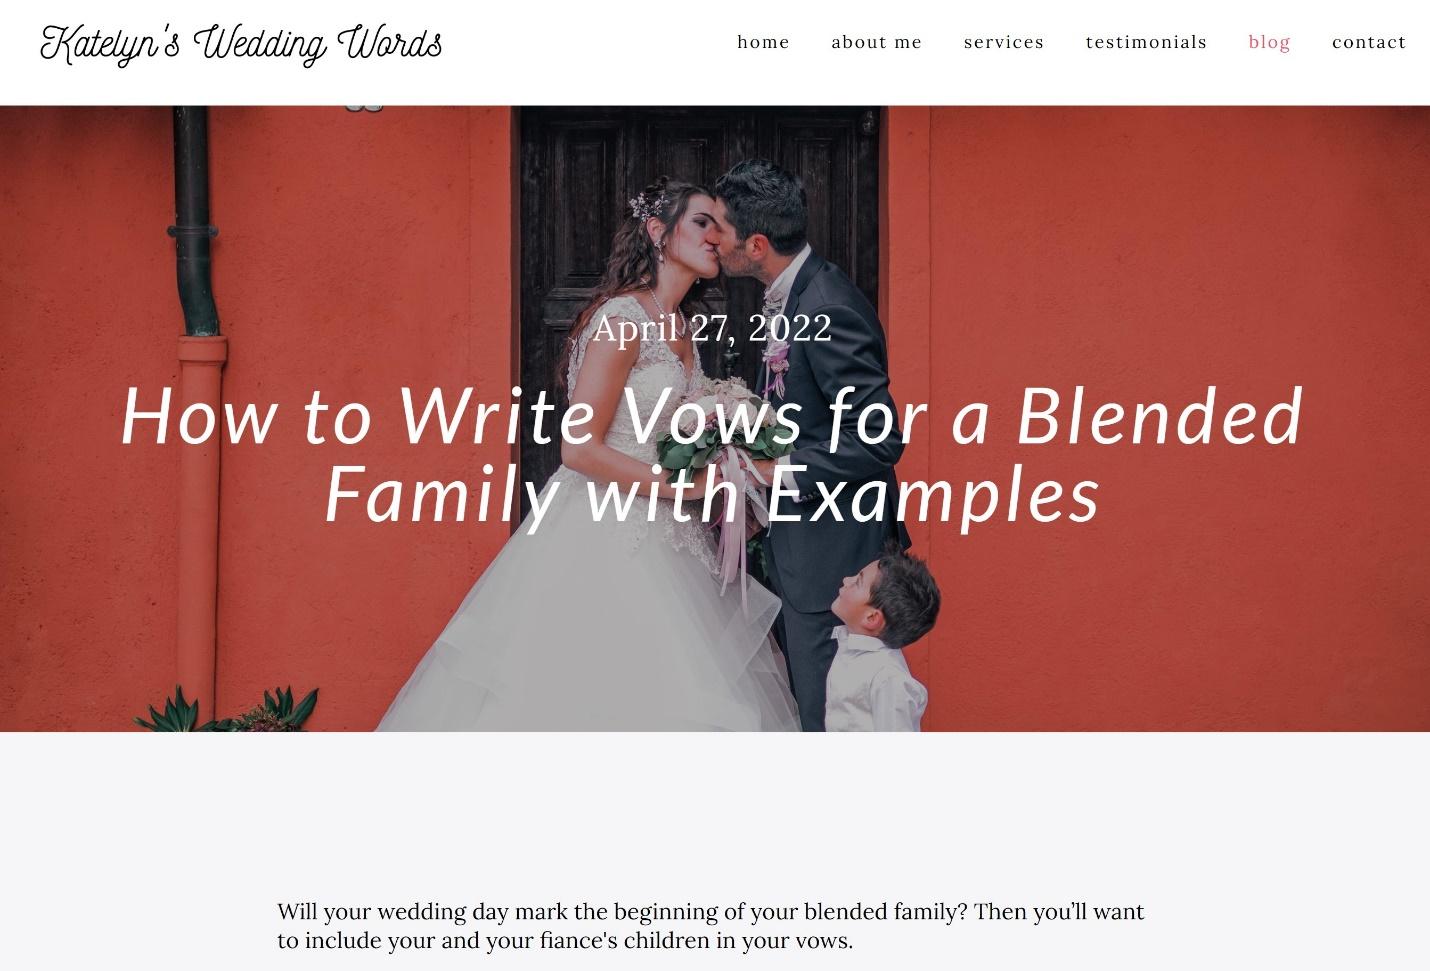 Katelyn's Wedding Words blog post.